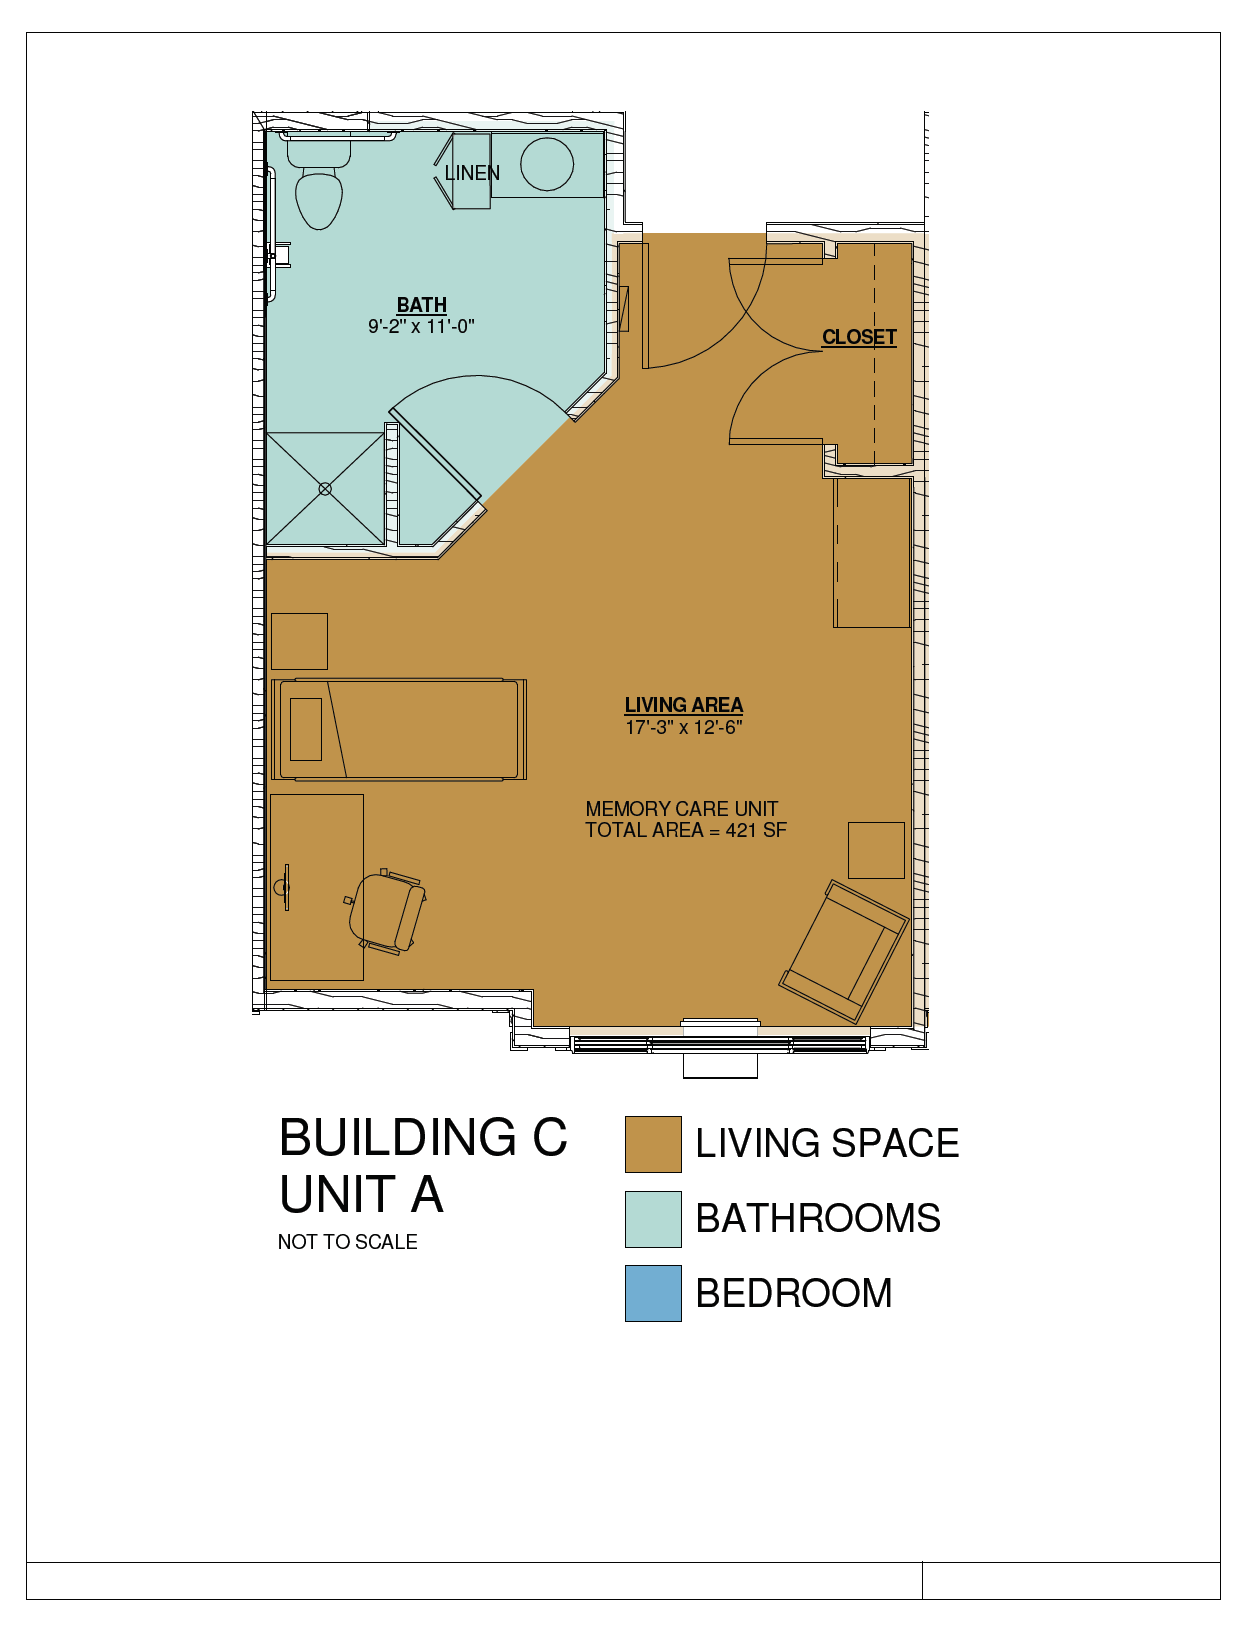 A floor plan for the building c unit.